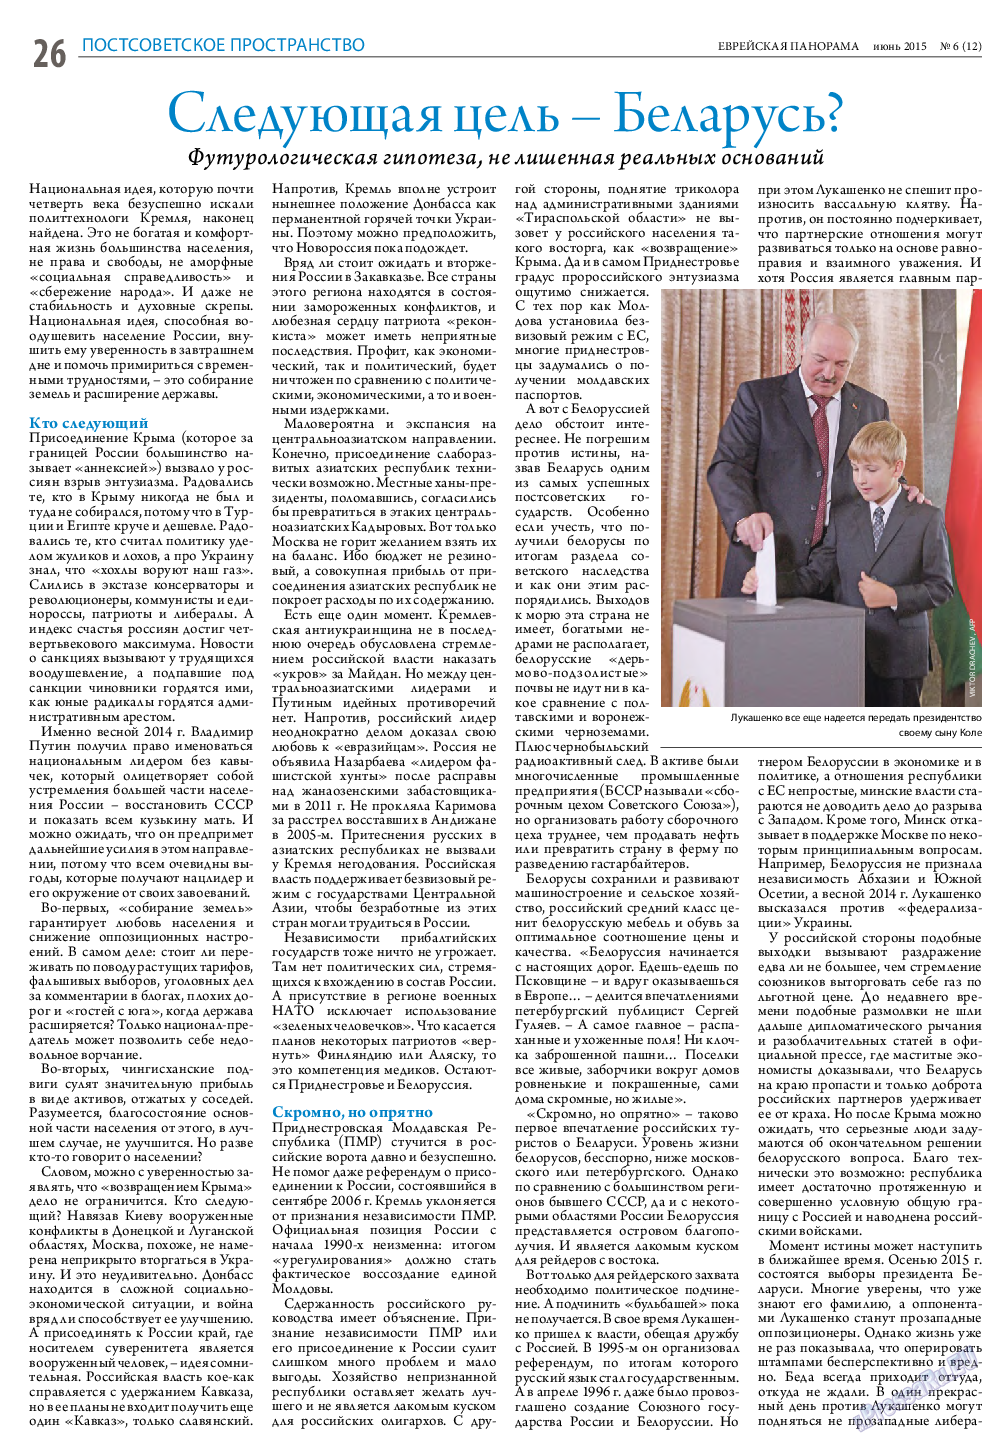 Еврейская панорама, газета. 2015 №6 стр.26